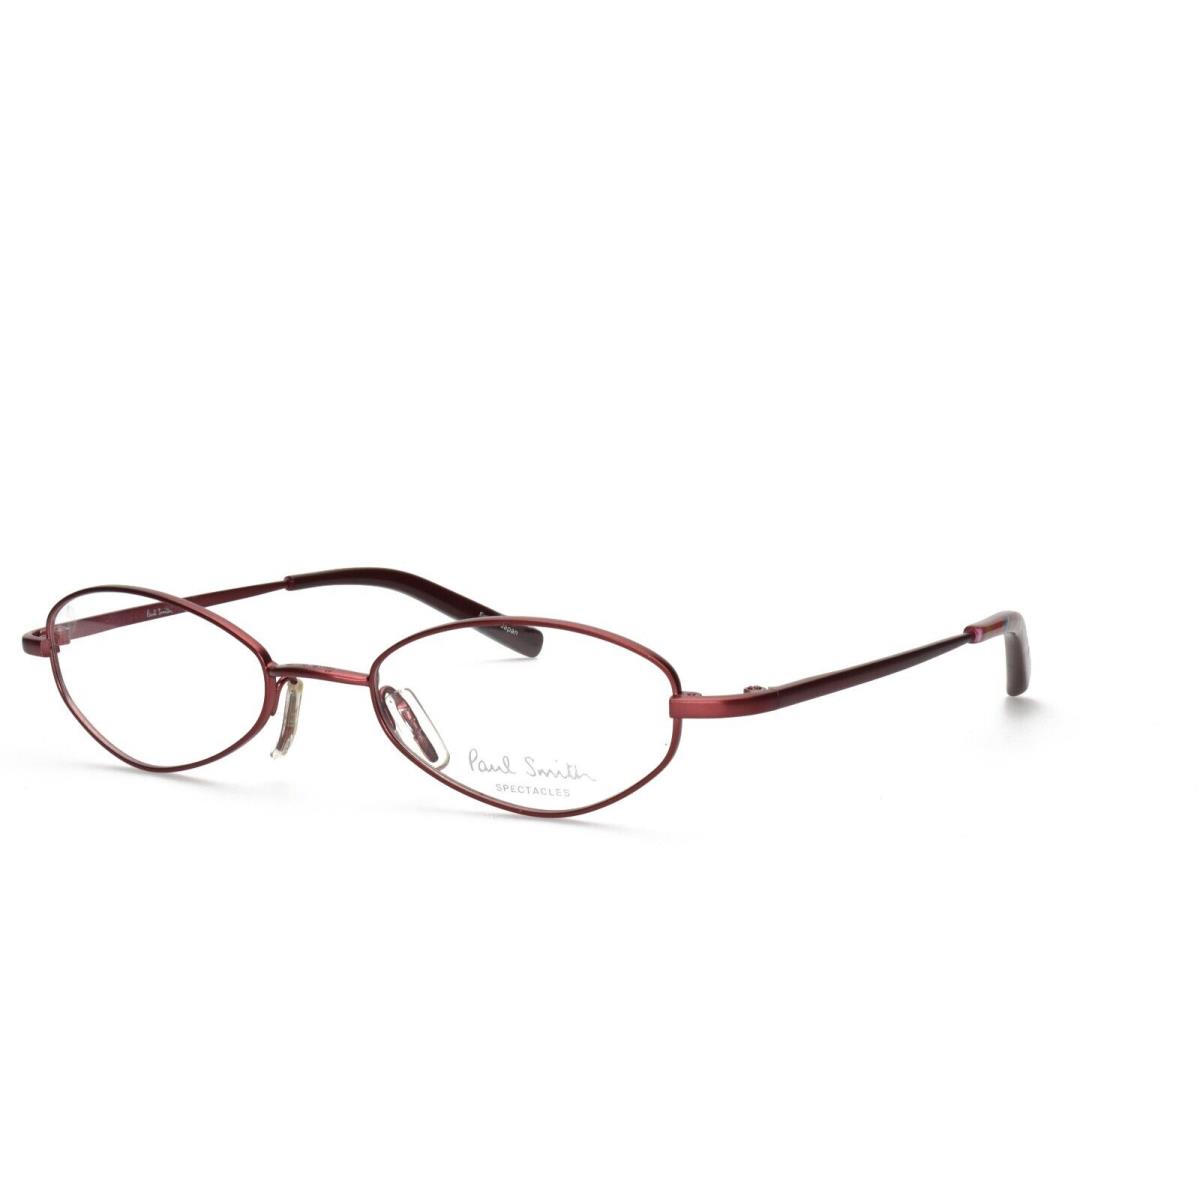 Paul Smith 198 Rou 48-19-132 Red Vtg Vintage Eyeglasses Frames